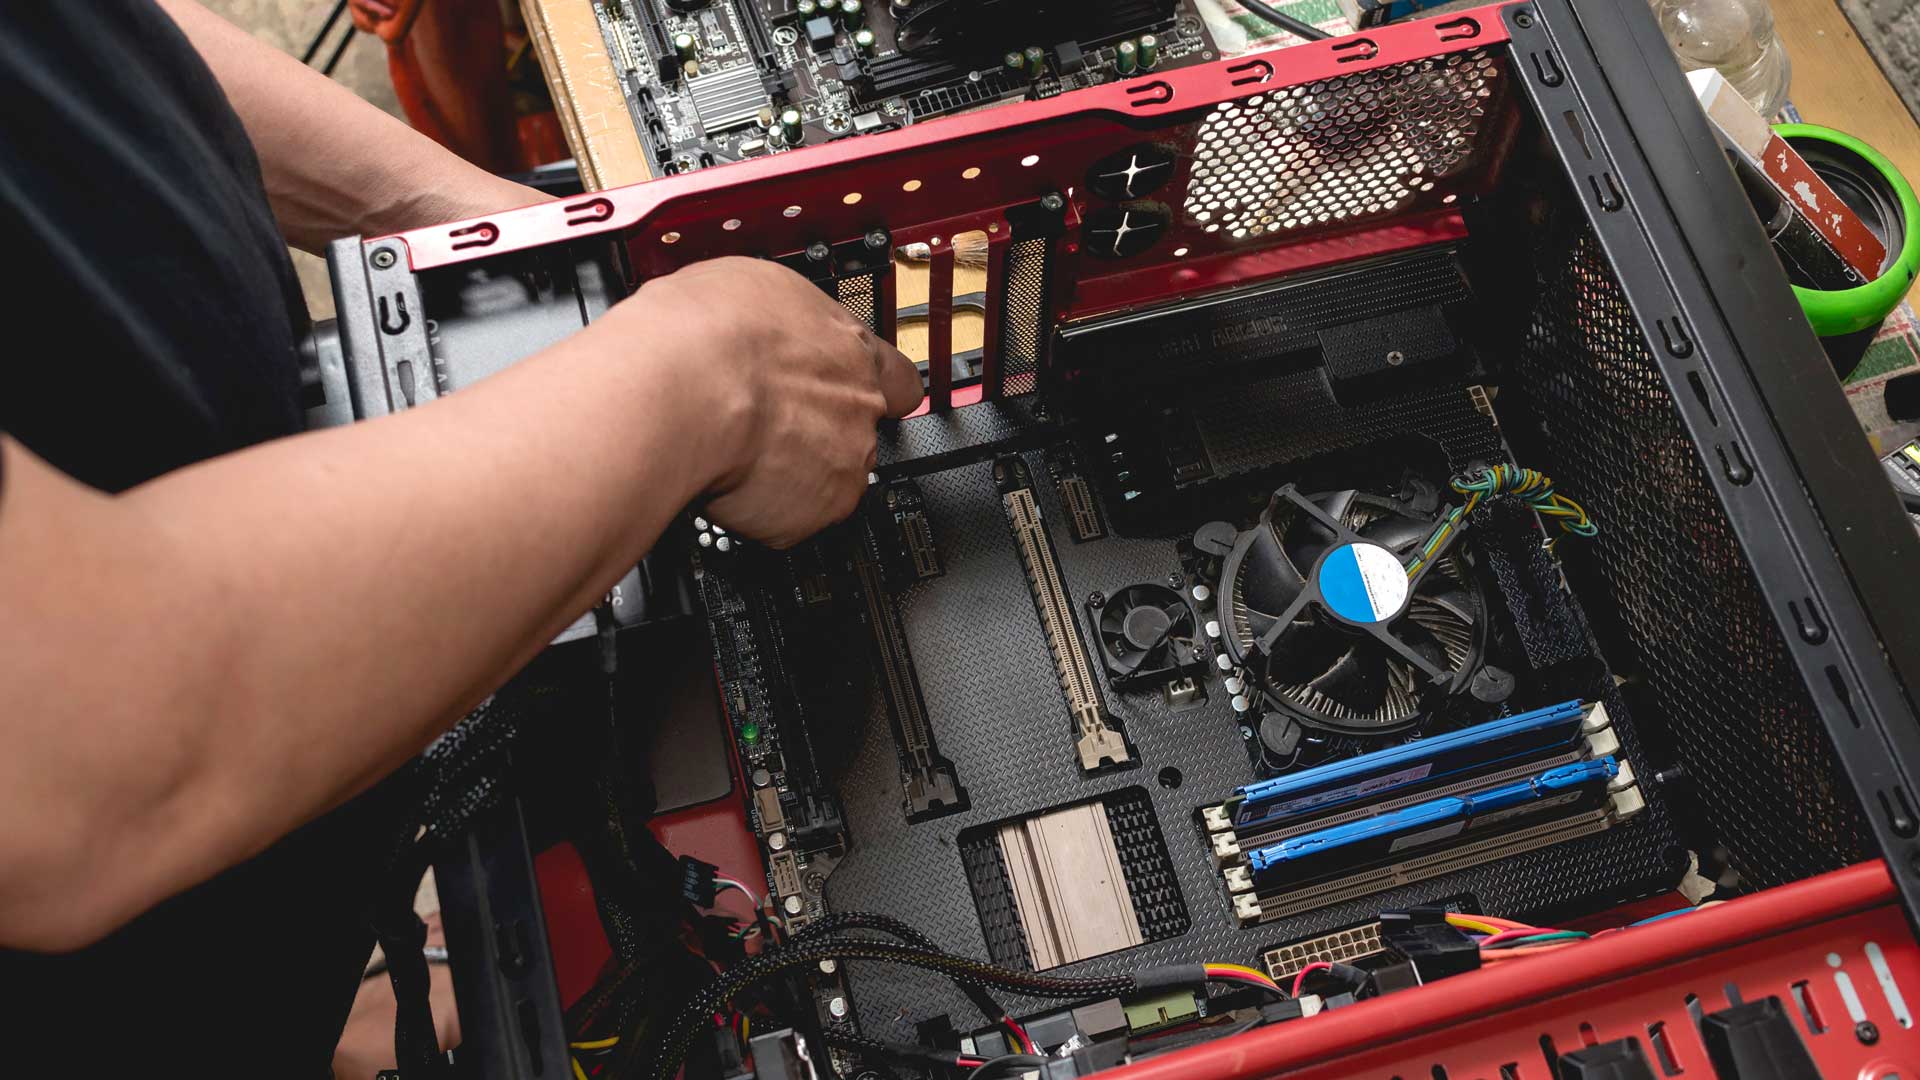 Repairing a business PC